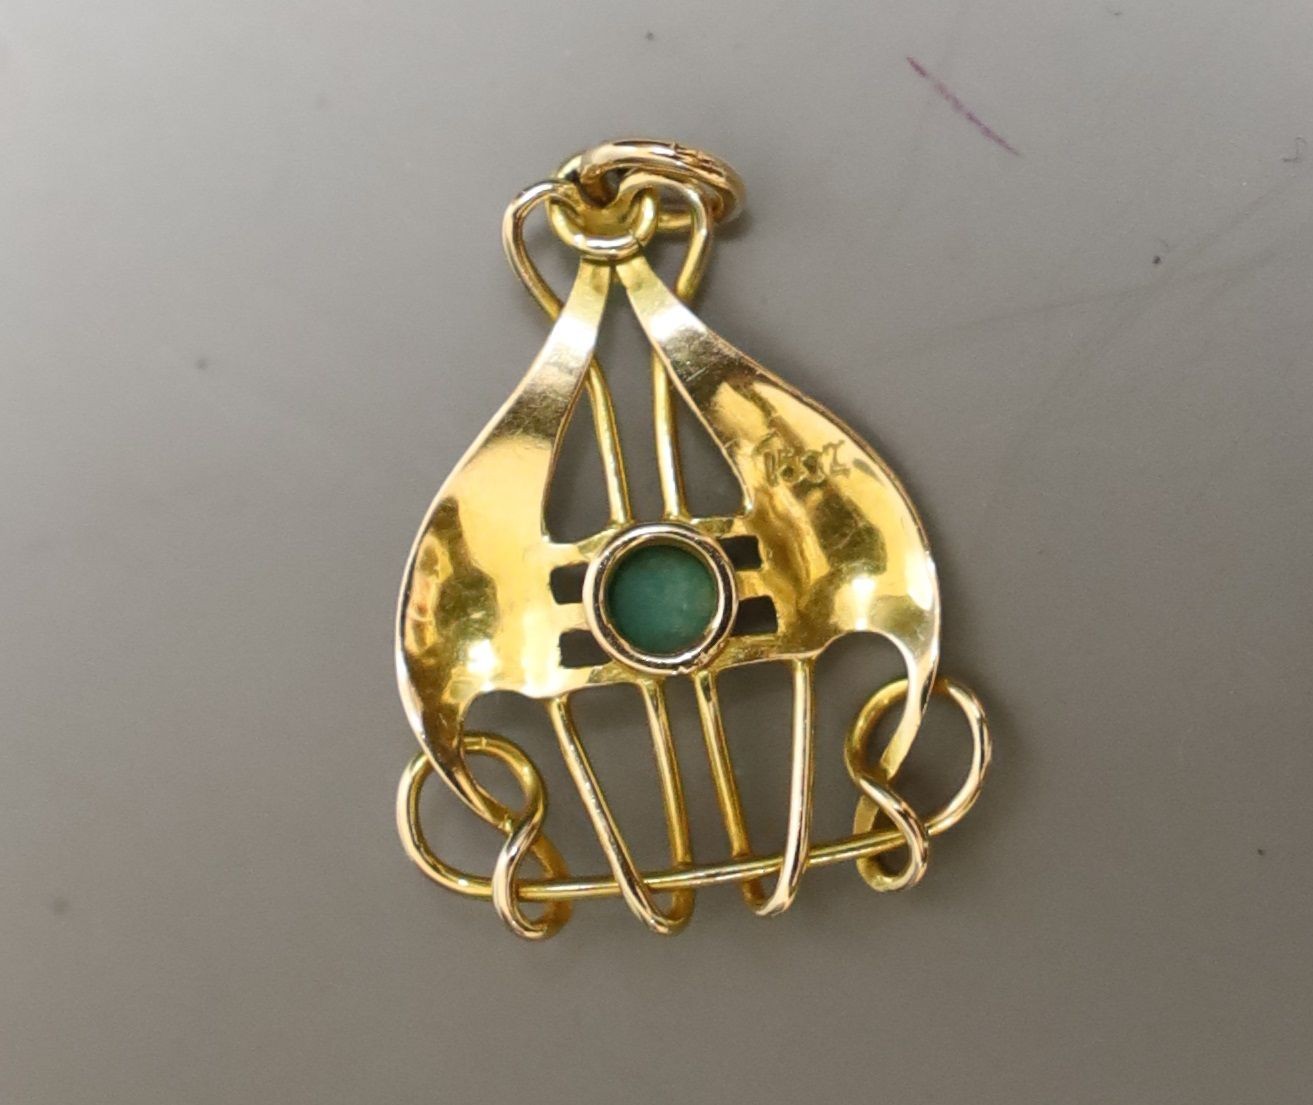 An Edwardian Art Nouveau 15ct and turquoise set pendant, 25mm, gross 2.2 grams.